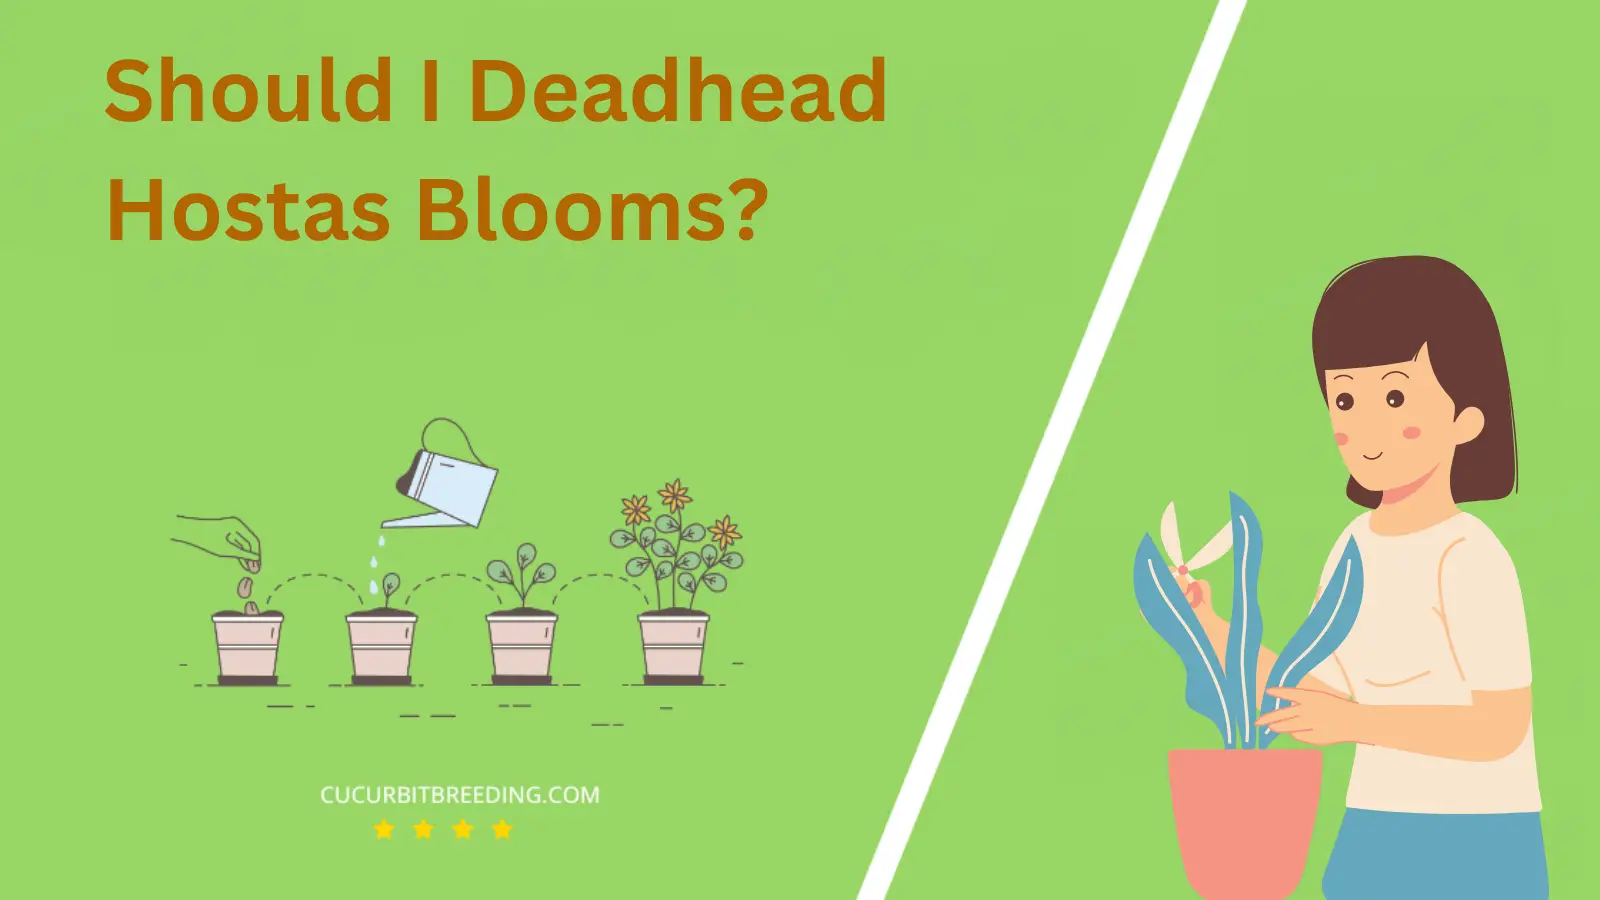 Should I Deadhead Hostas Blooms?